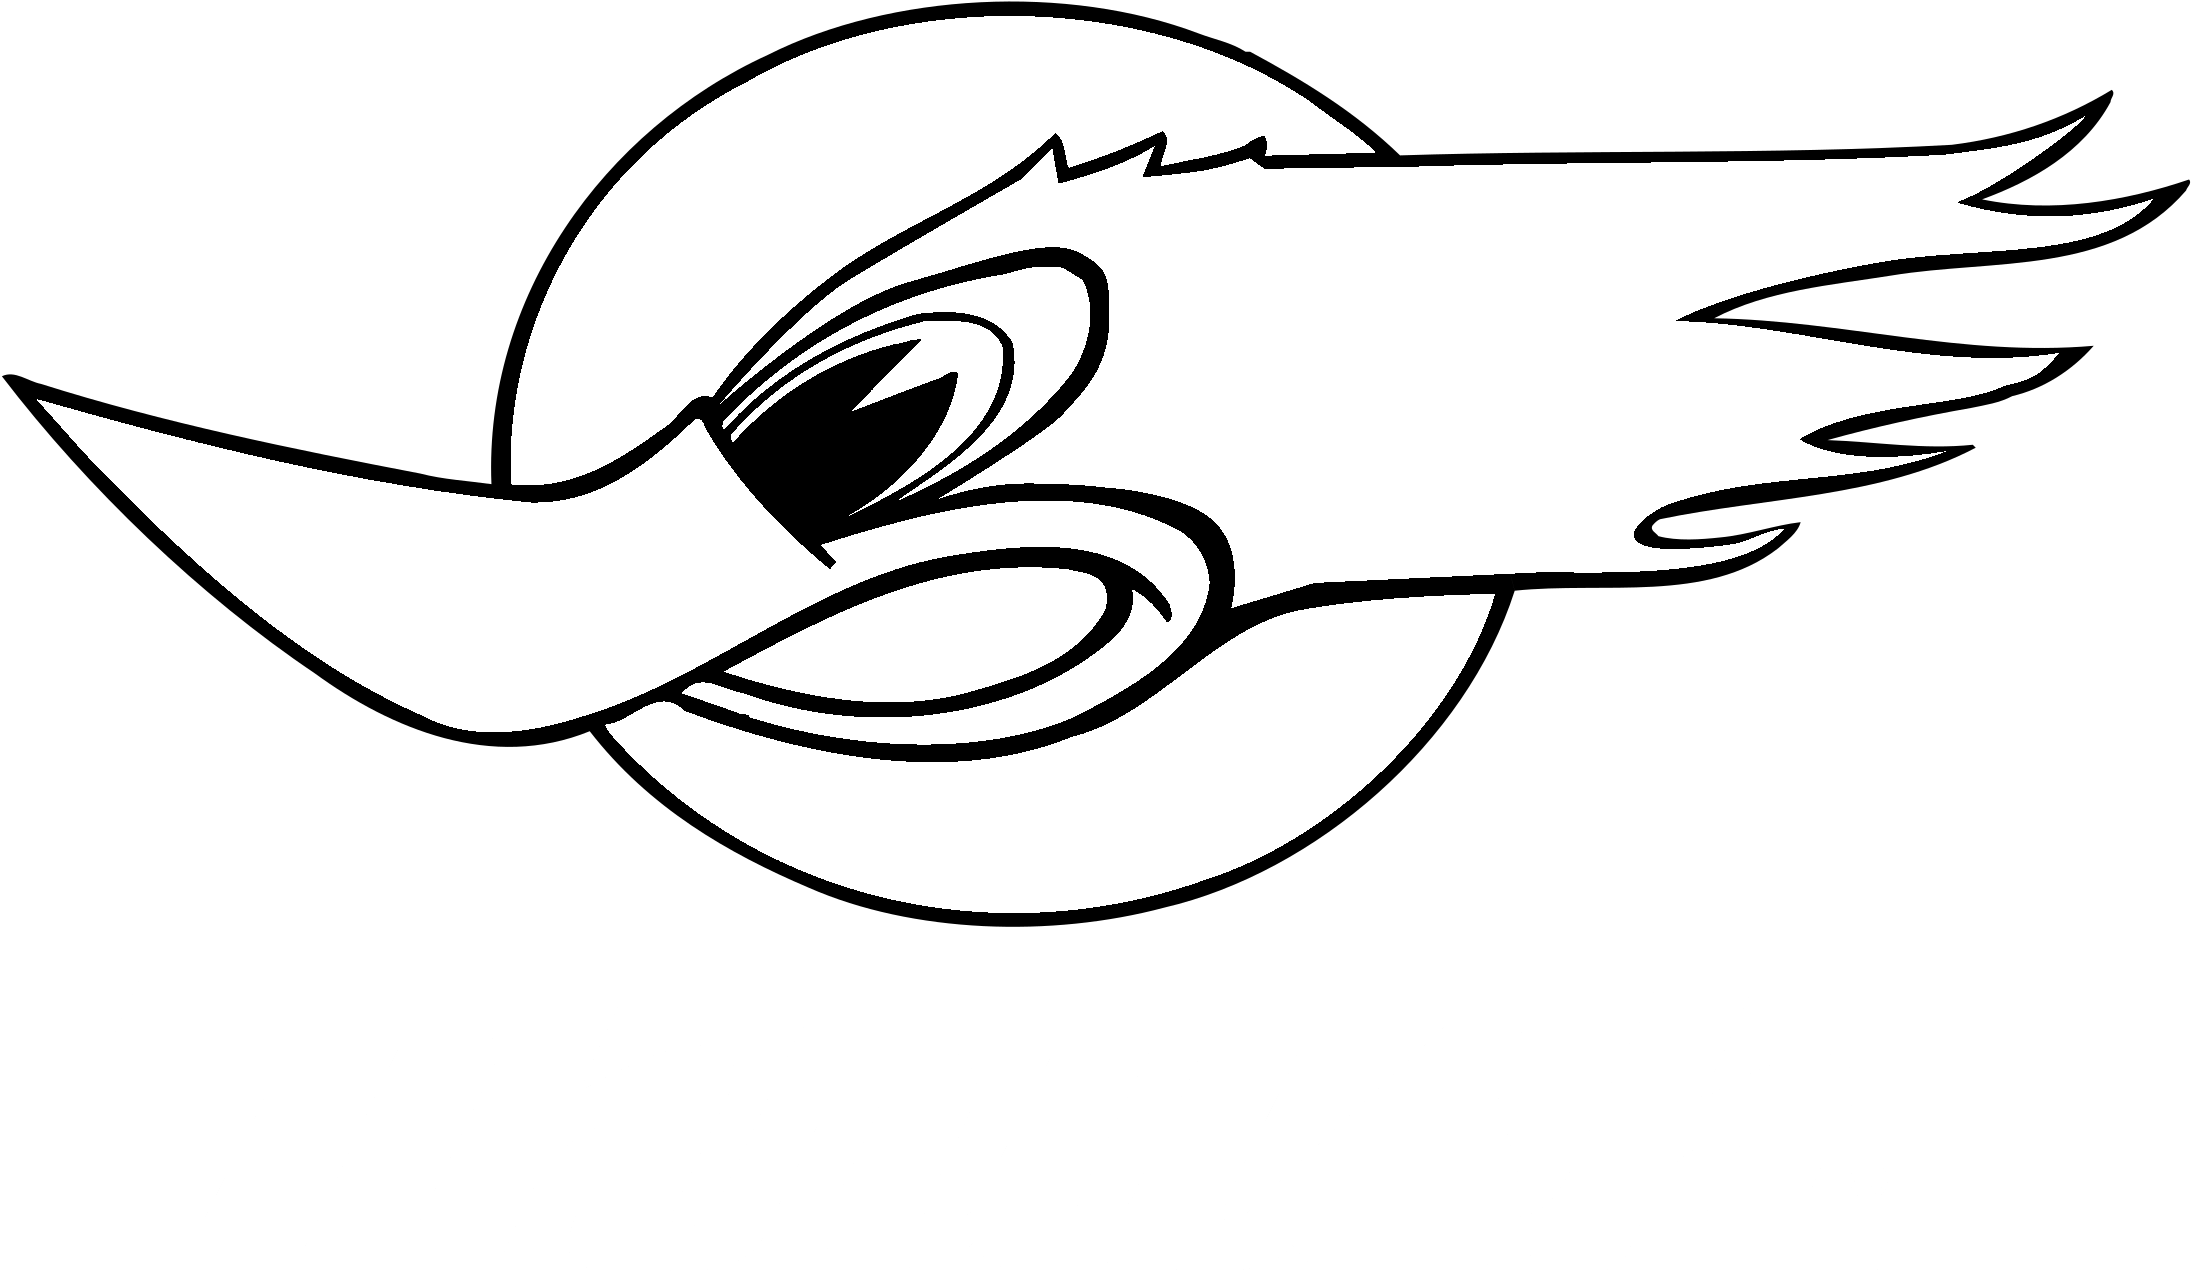 Thrush Logo Black And White.